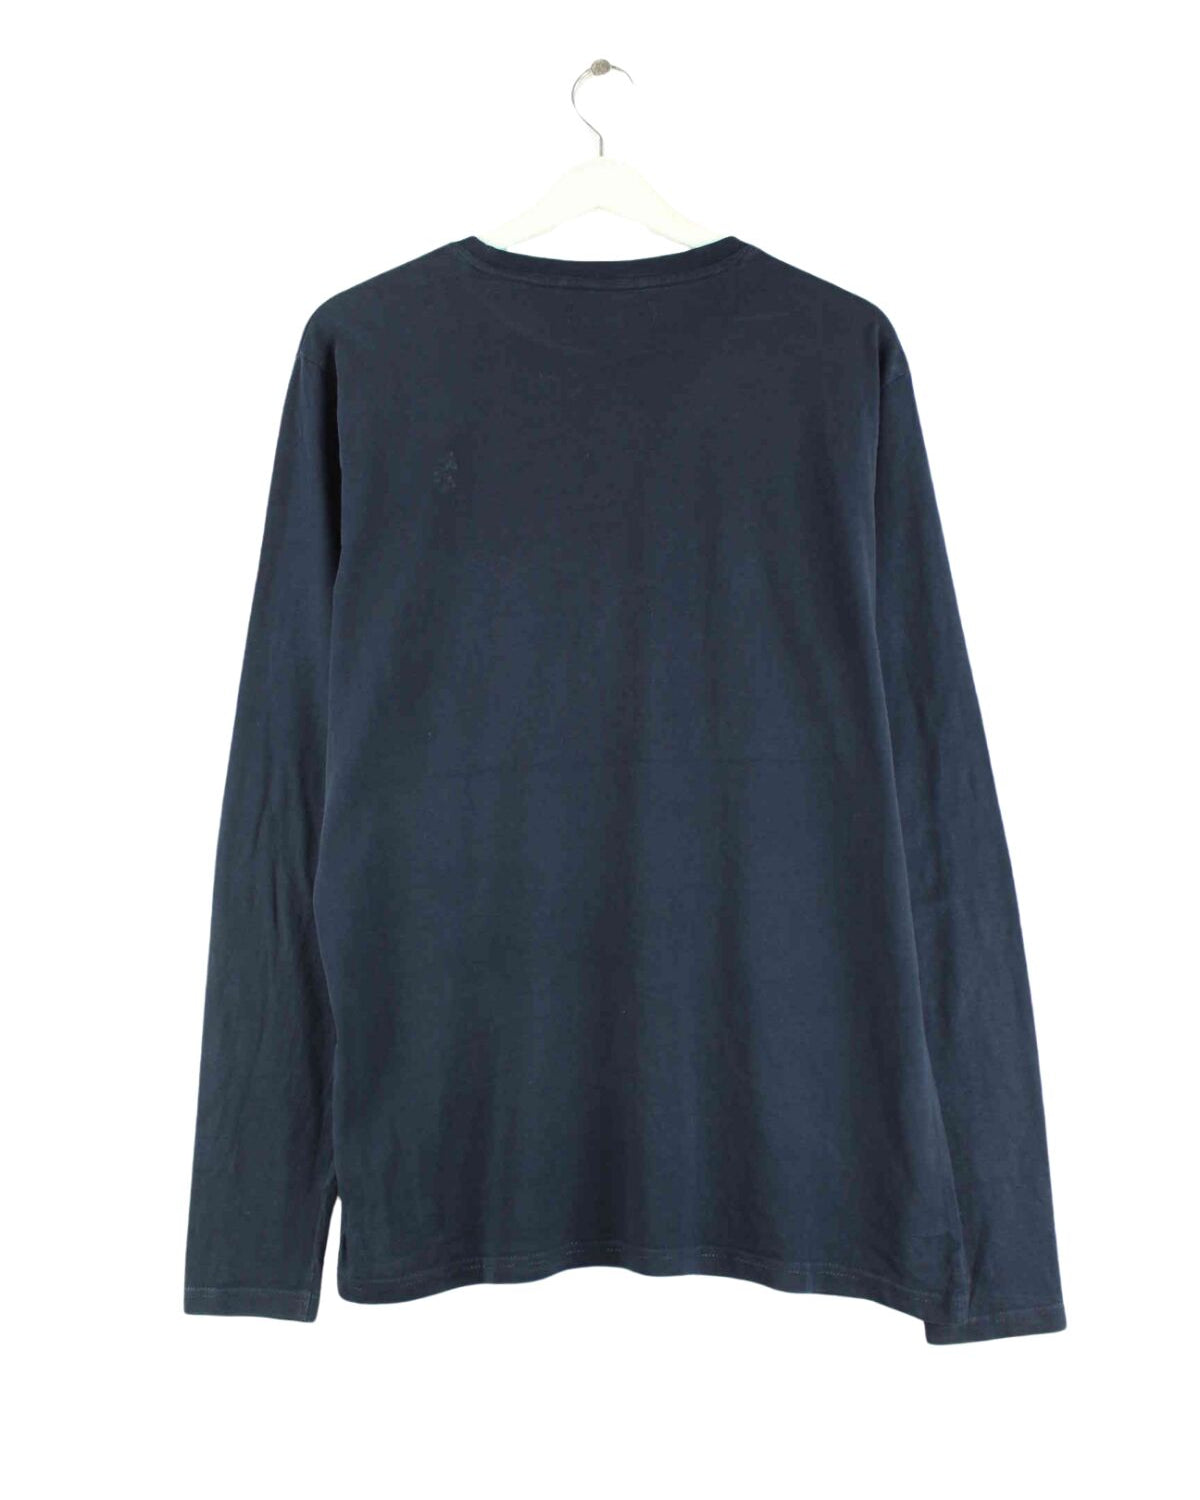 U.S. Polo ASSN. Basic Sweatshirt Blau L (back image)